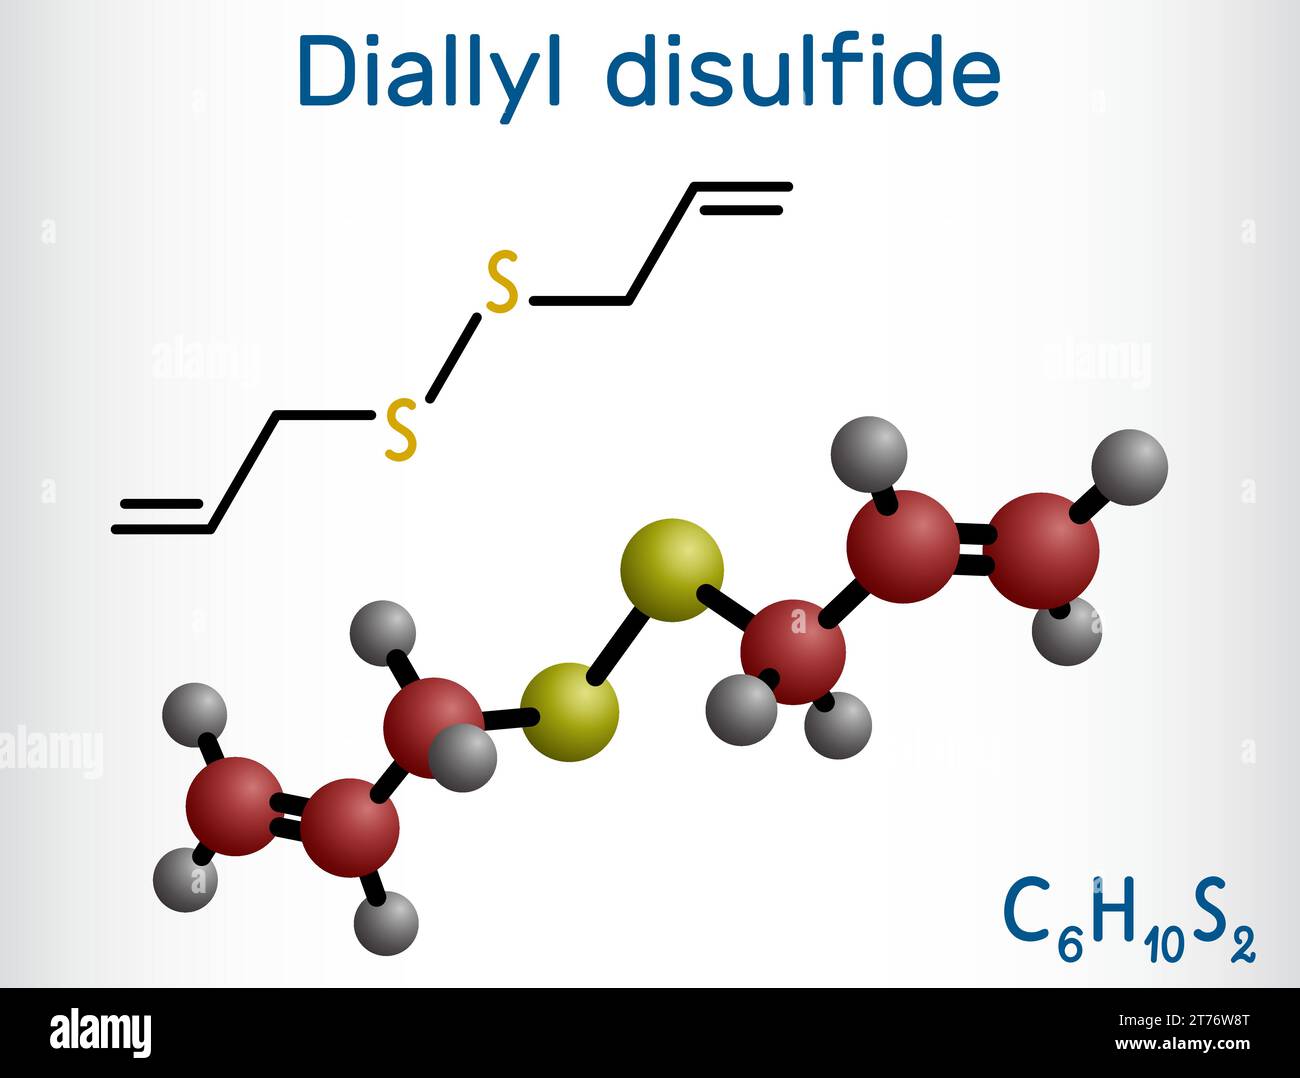 Diallyl disulfide, DADS molecule. Structural chemical formula, molecule model. Stock Vector